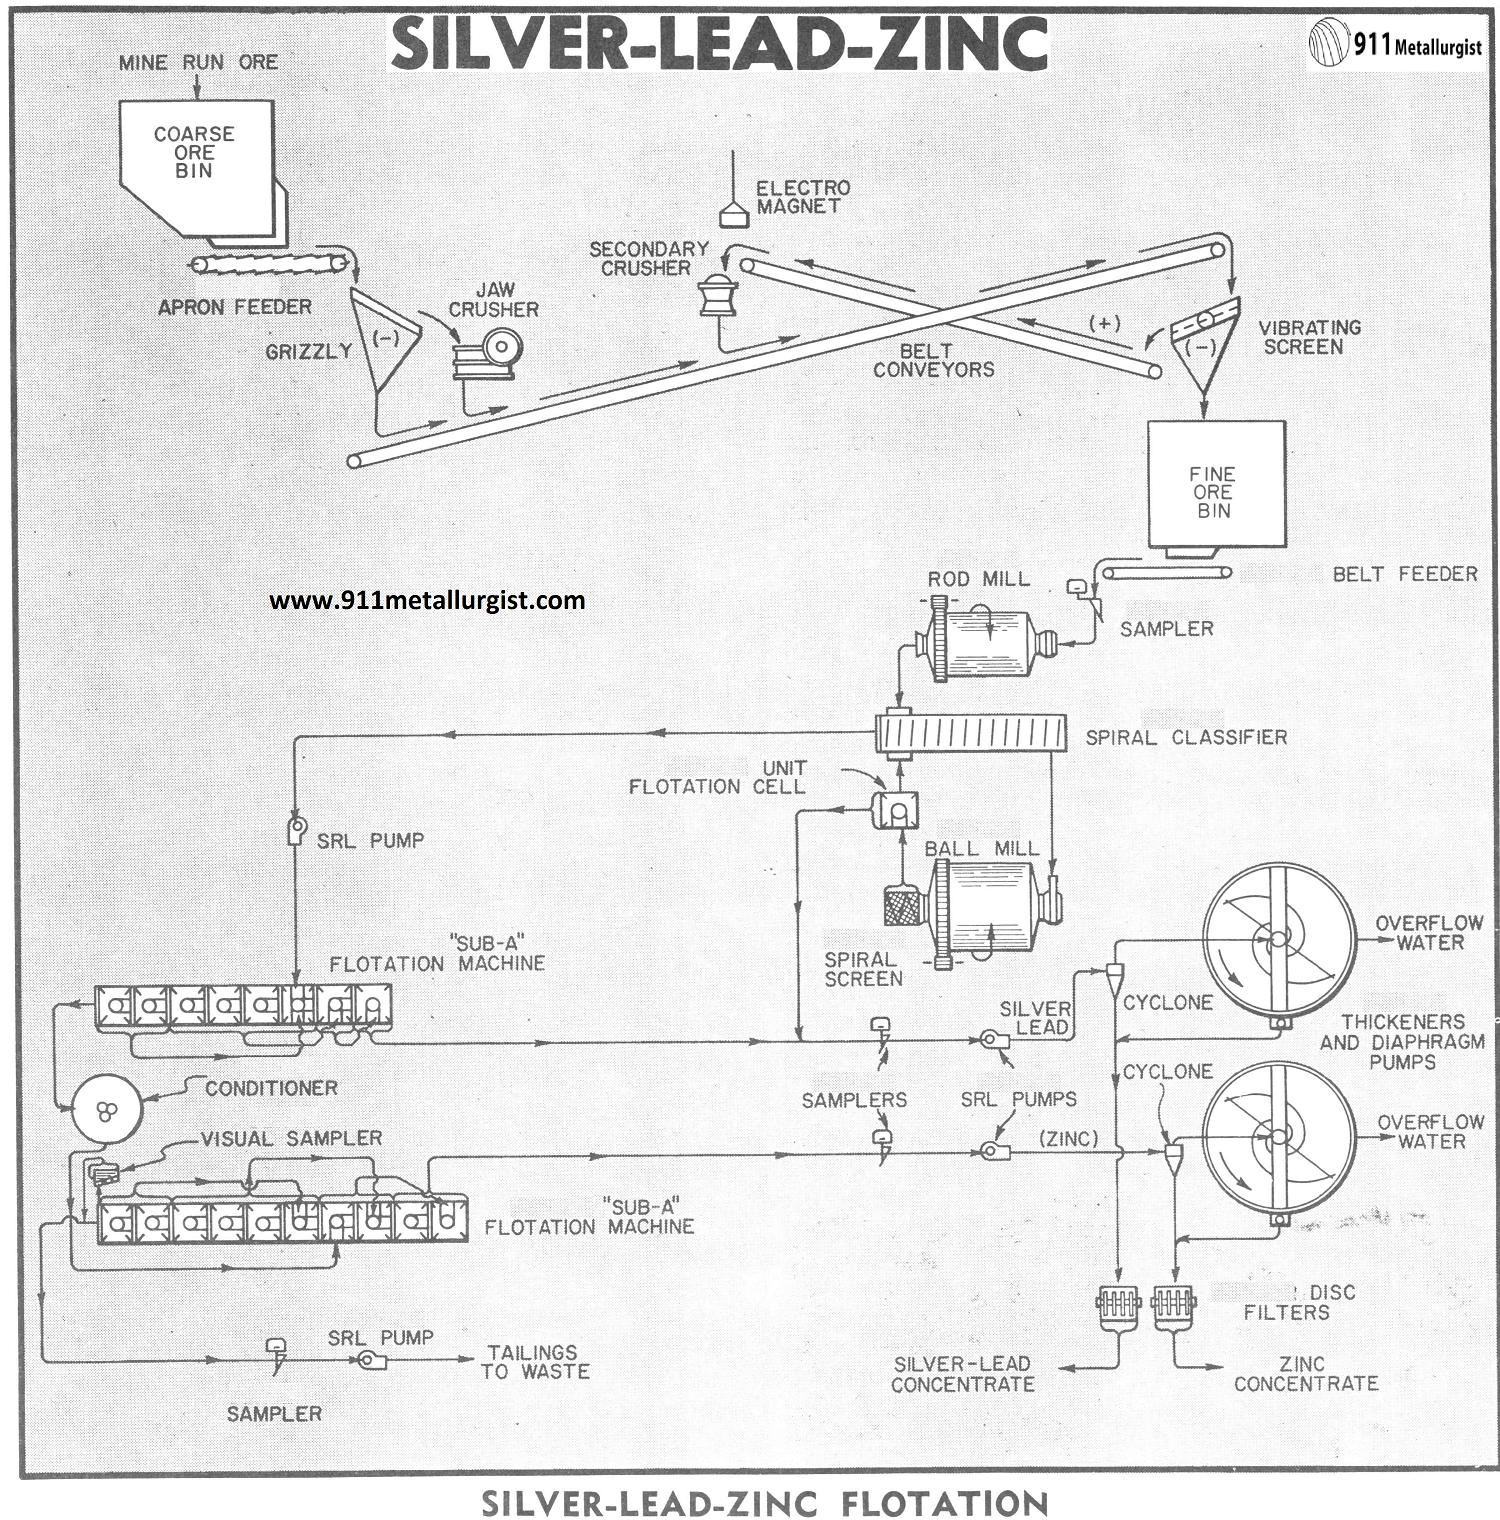 Silver-Lead-Zinc Flotation